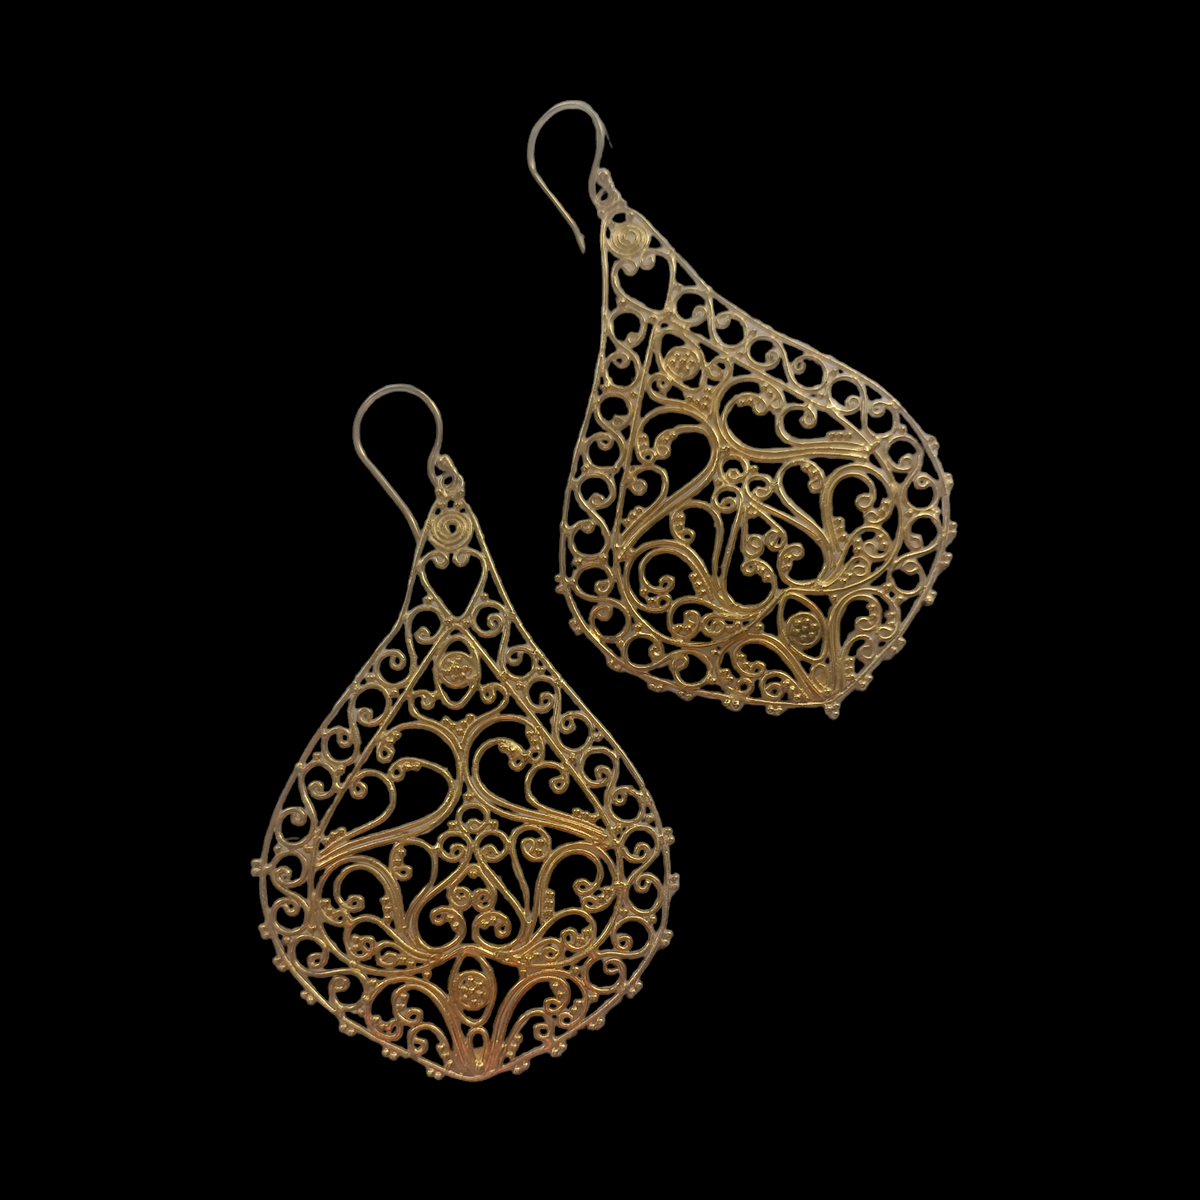 Handcrafted filigree earrings